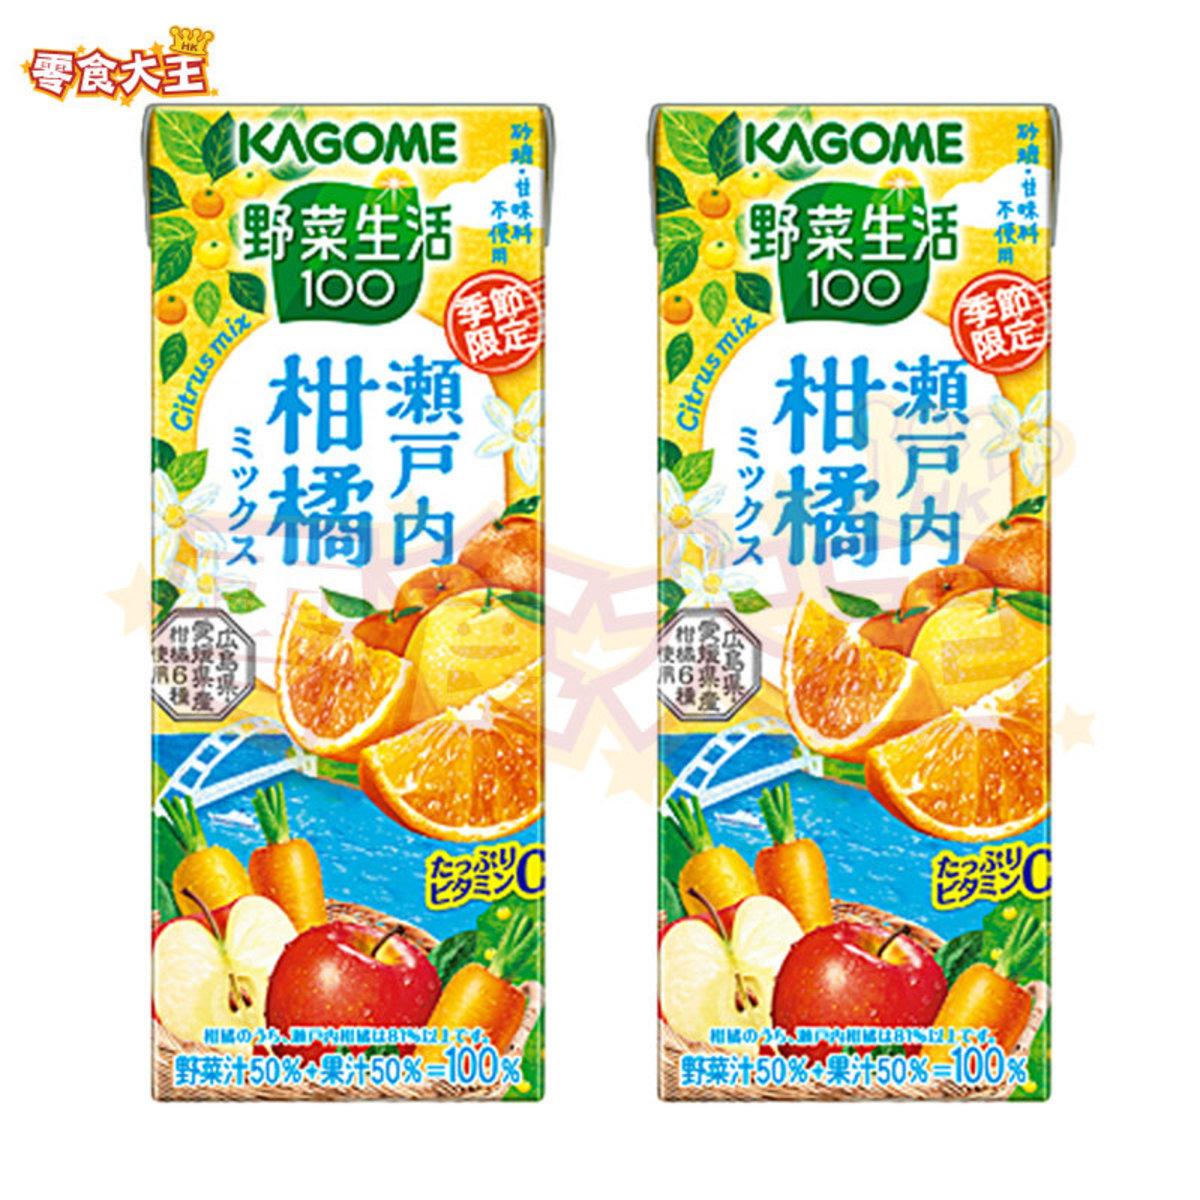 Kagome 100 瀨戶內柑橘野菜混合果汁0ml X 2盒 季節限定 2 香港電視hktvmall 網上購物